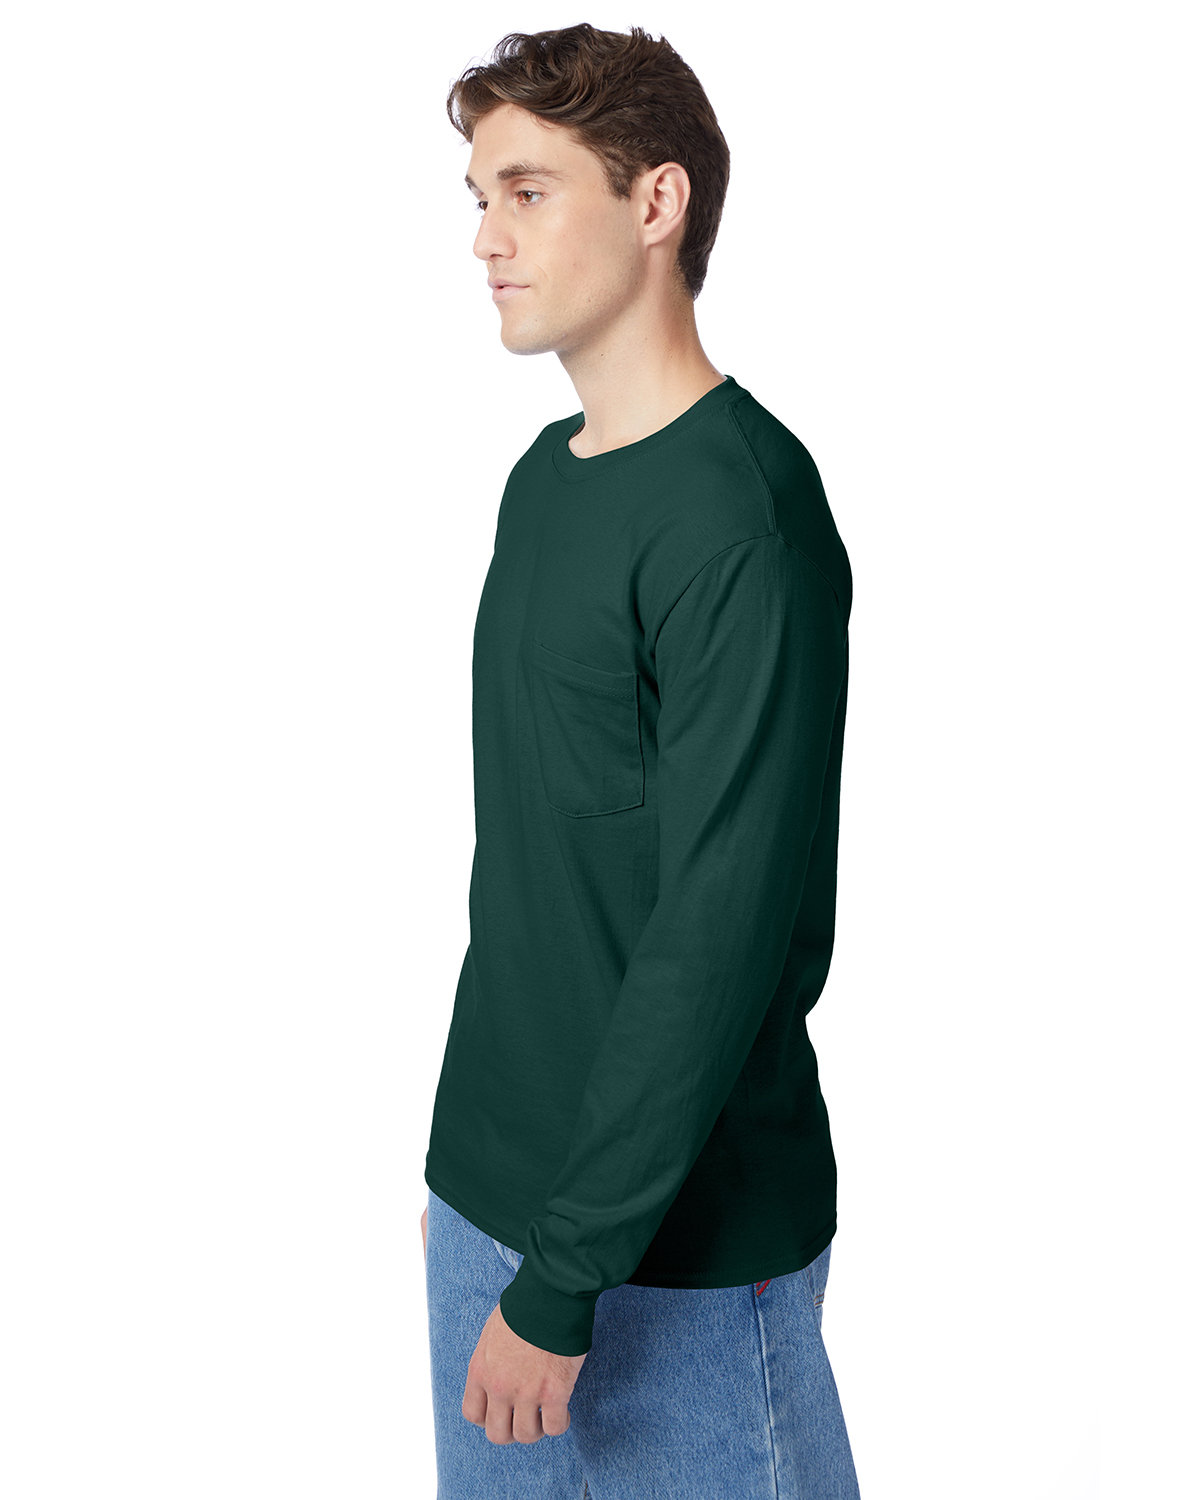 Hanes Men's Authentic-T Long-Sleeve Pocket T-Shirt DEEP FOREST 